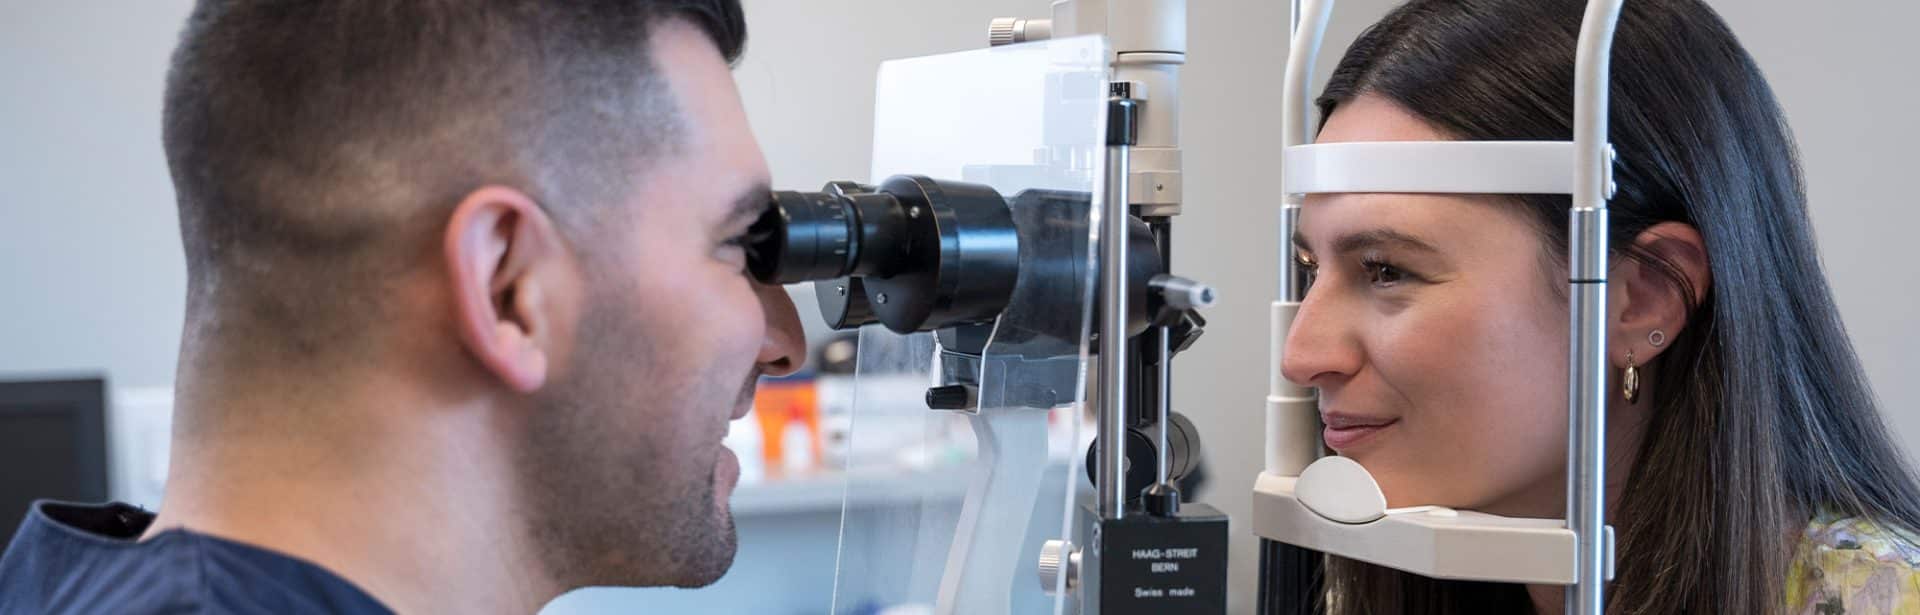 An optometrist examining a man's eye health through a microscope.